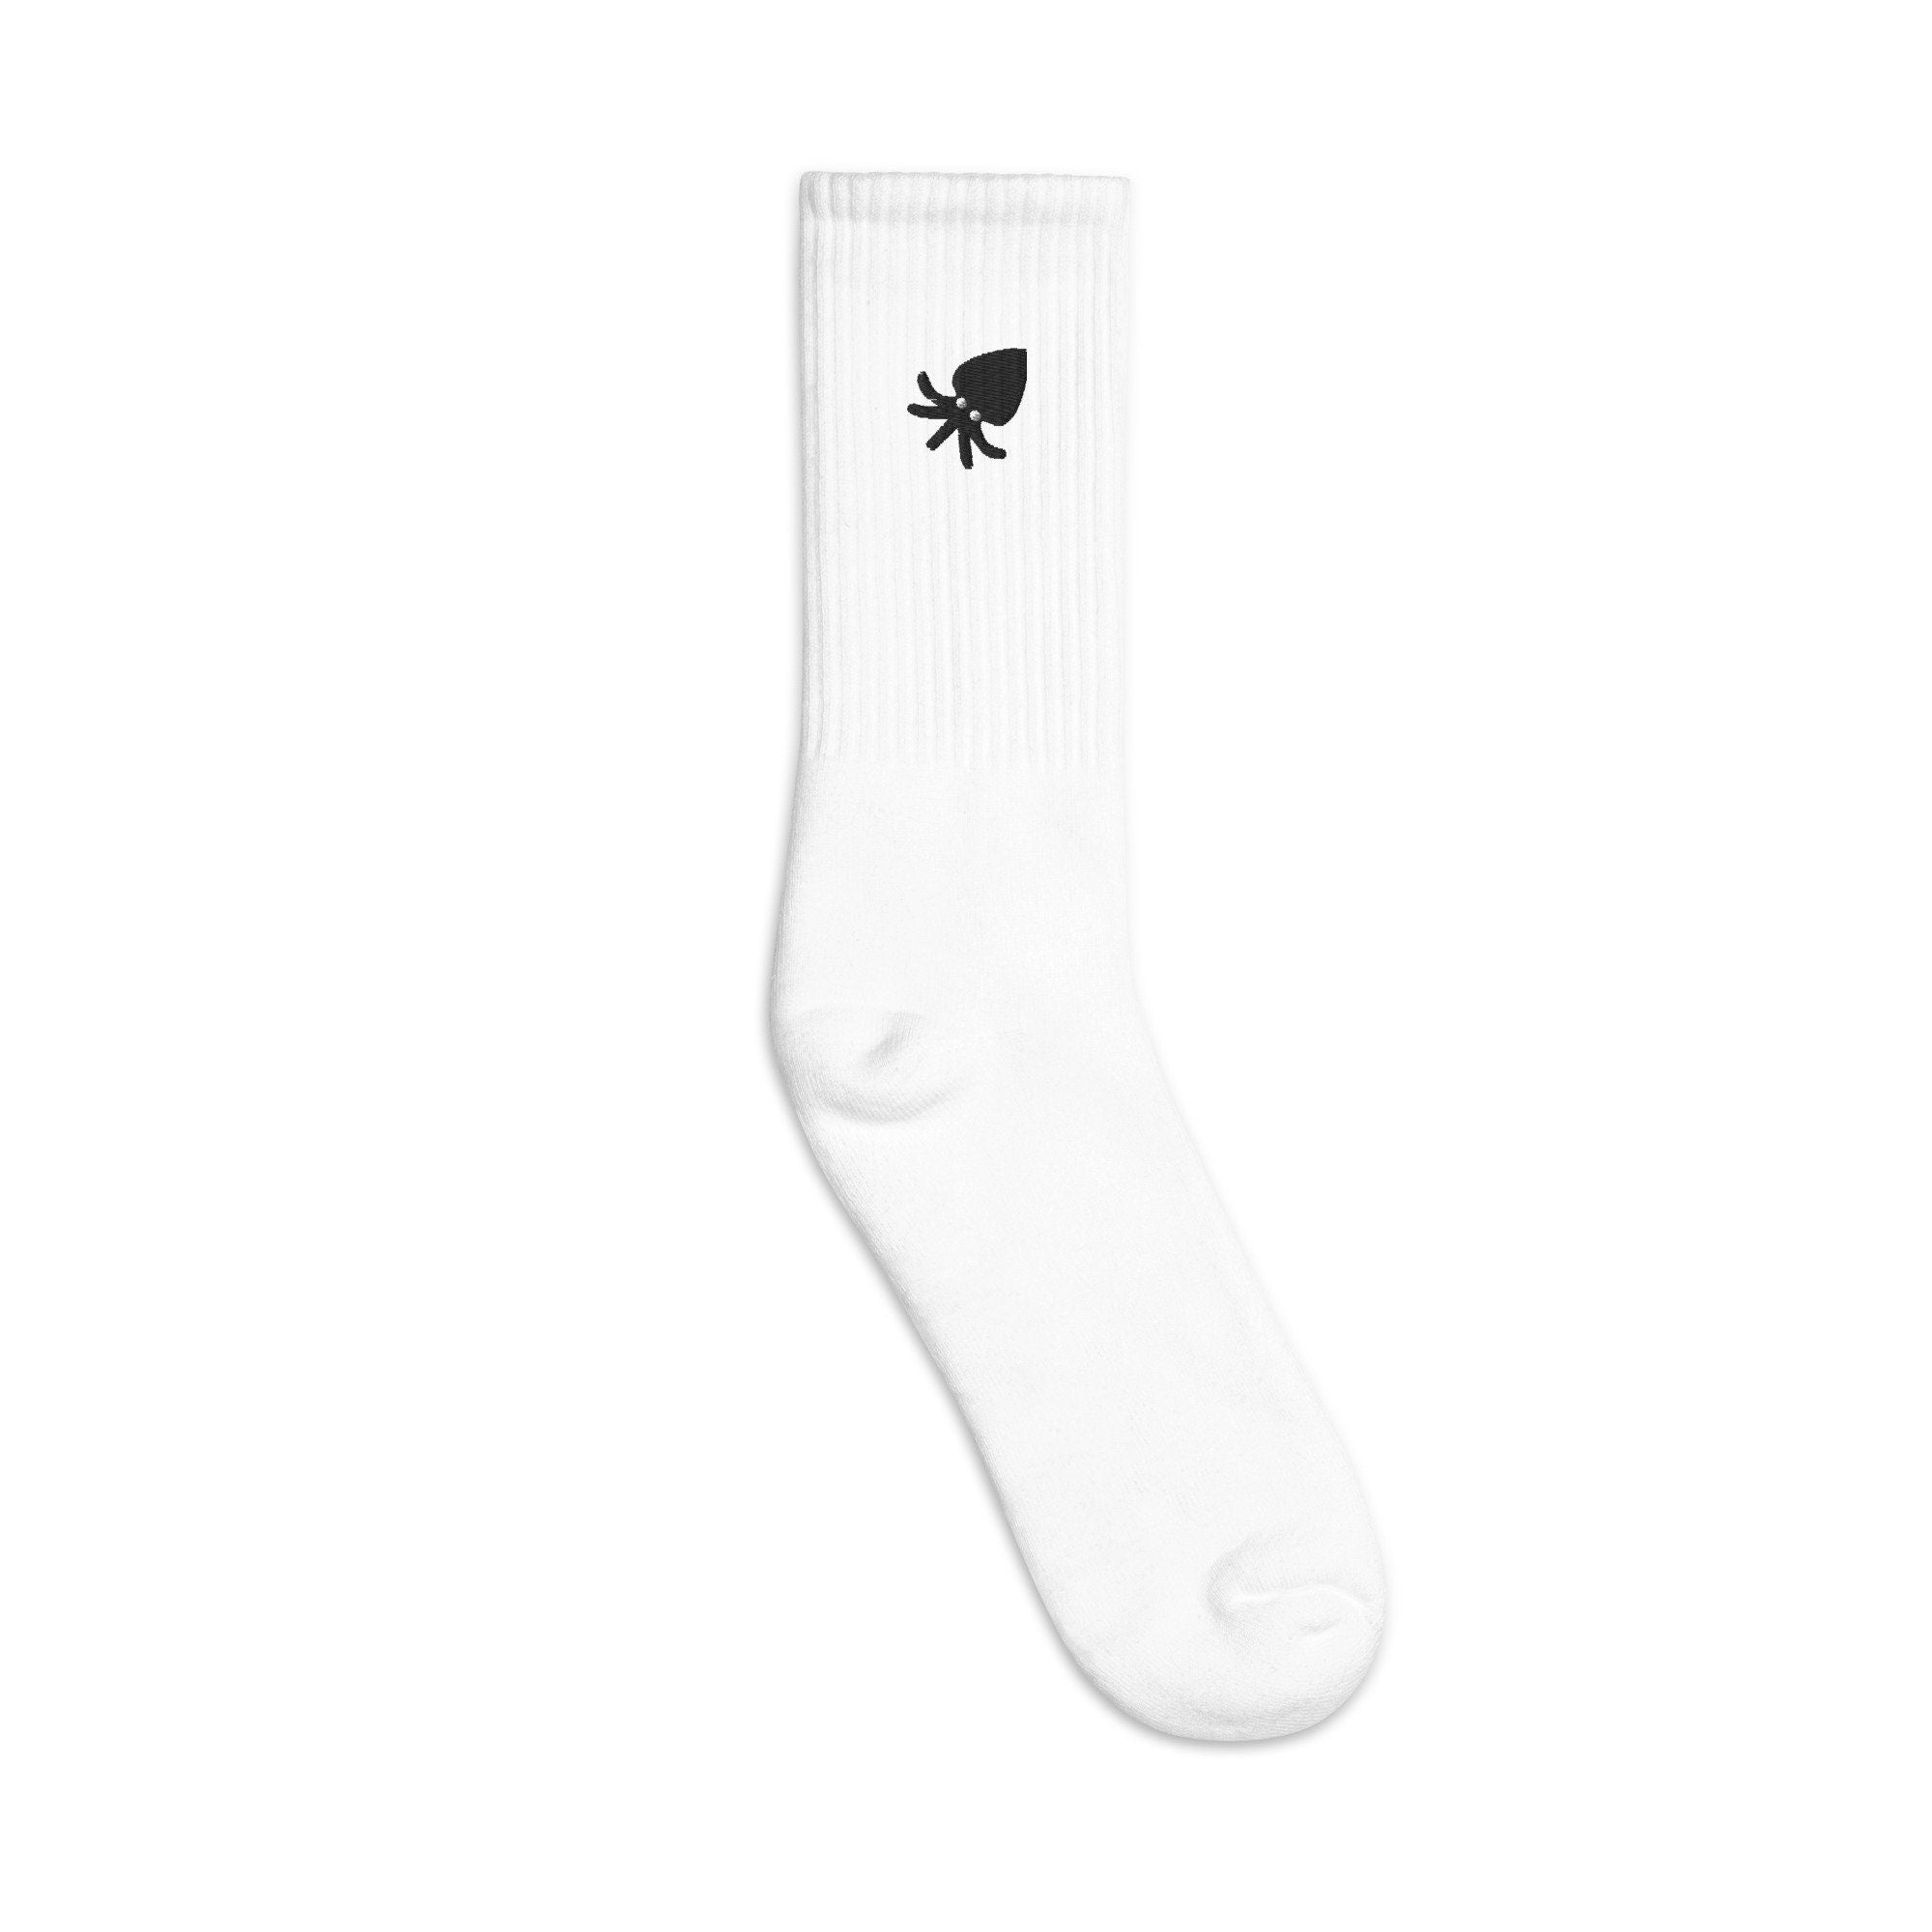 Squid Embroidered Socks, Premium Embroidered Socks, Long Socks Gift - Multiple Colors